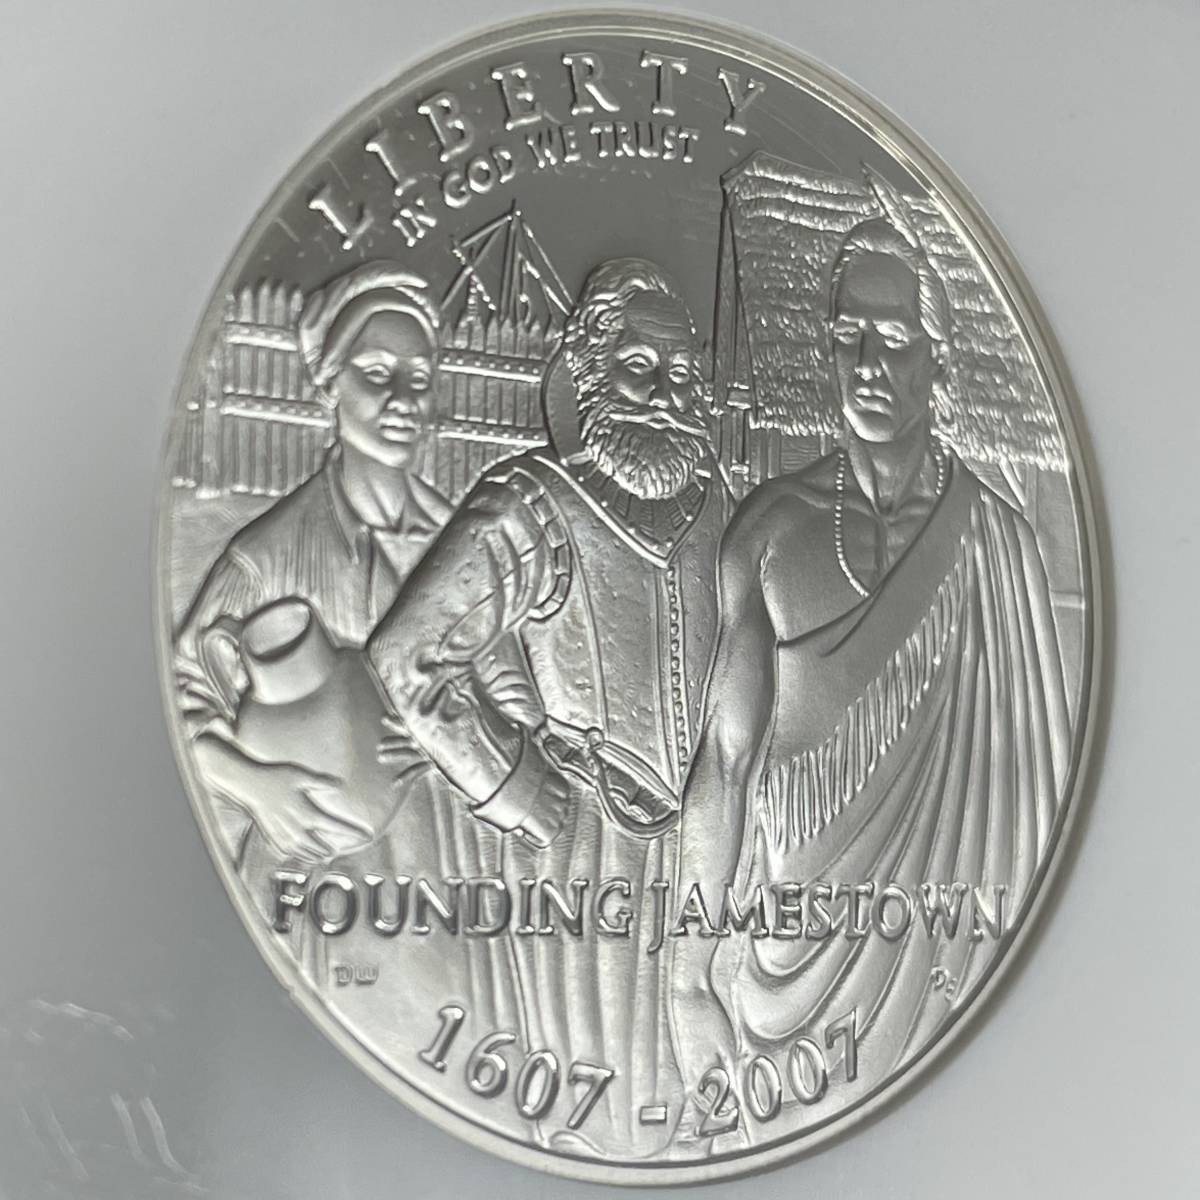 【PF 70 UC】 2007 アメリカ ジェームスタウン アメリカ開拓400周年記念 1ドル 銀貨 NGC アンティークコイン モダン_画像5